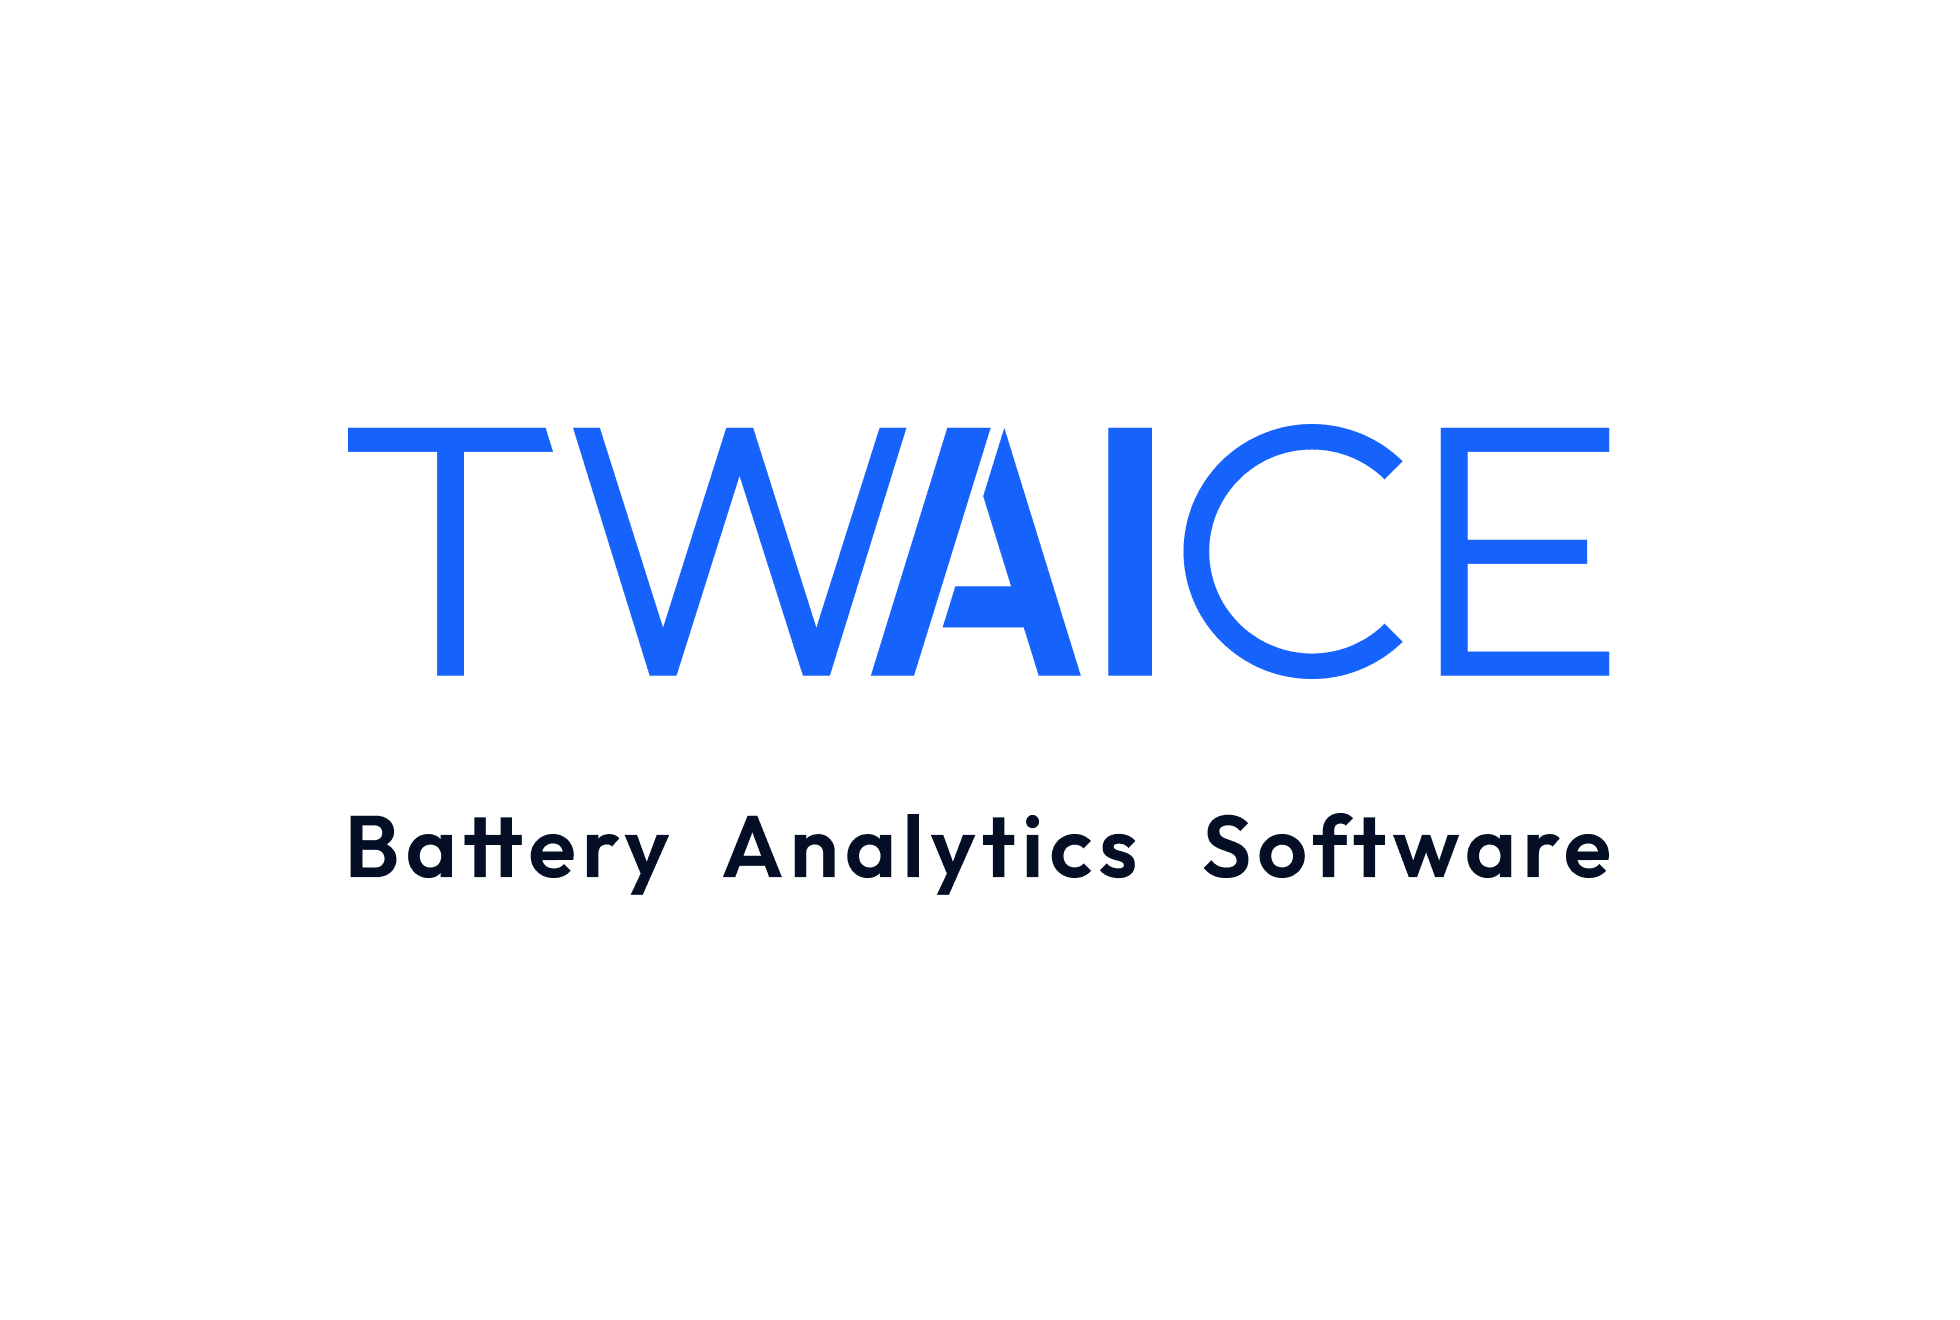 Product: TWAICE Battery Analytics Platform